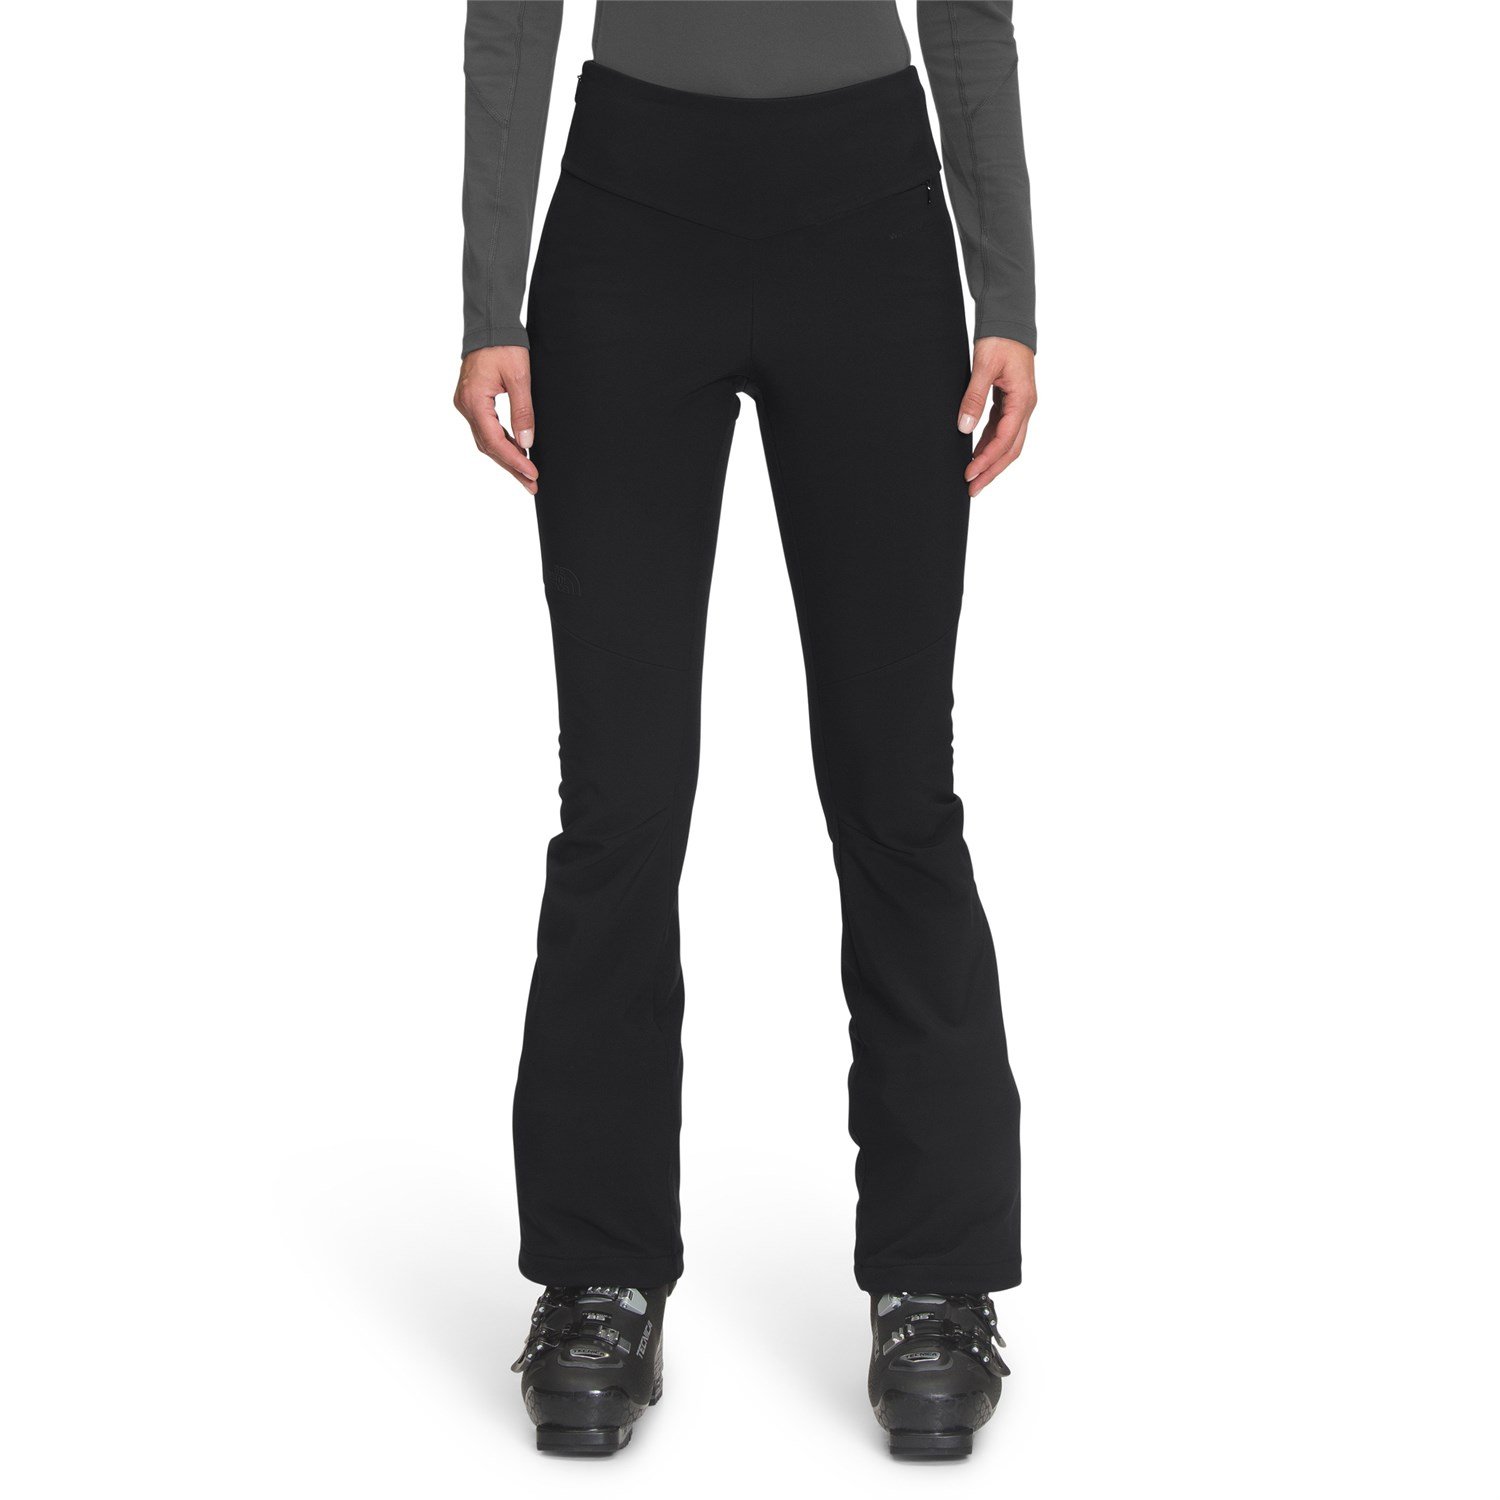 Avalanche Women's Pants~BLACK~ High Waisted~Zip Pocket~4 Way